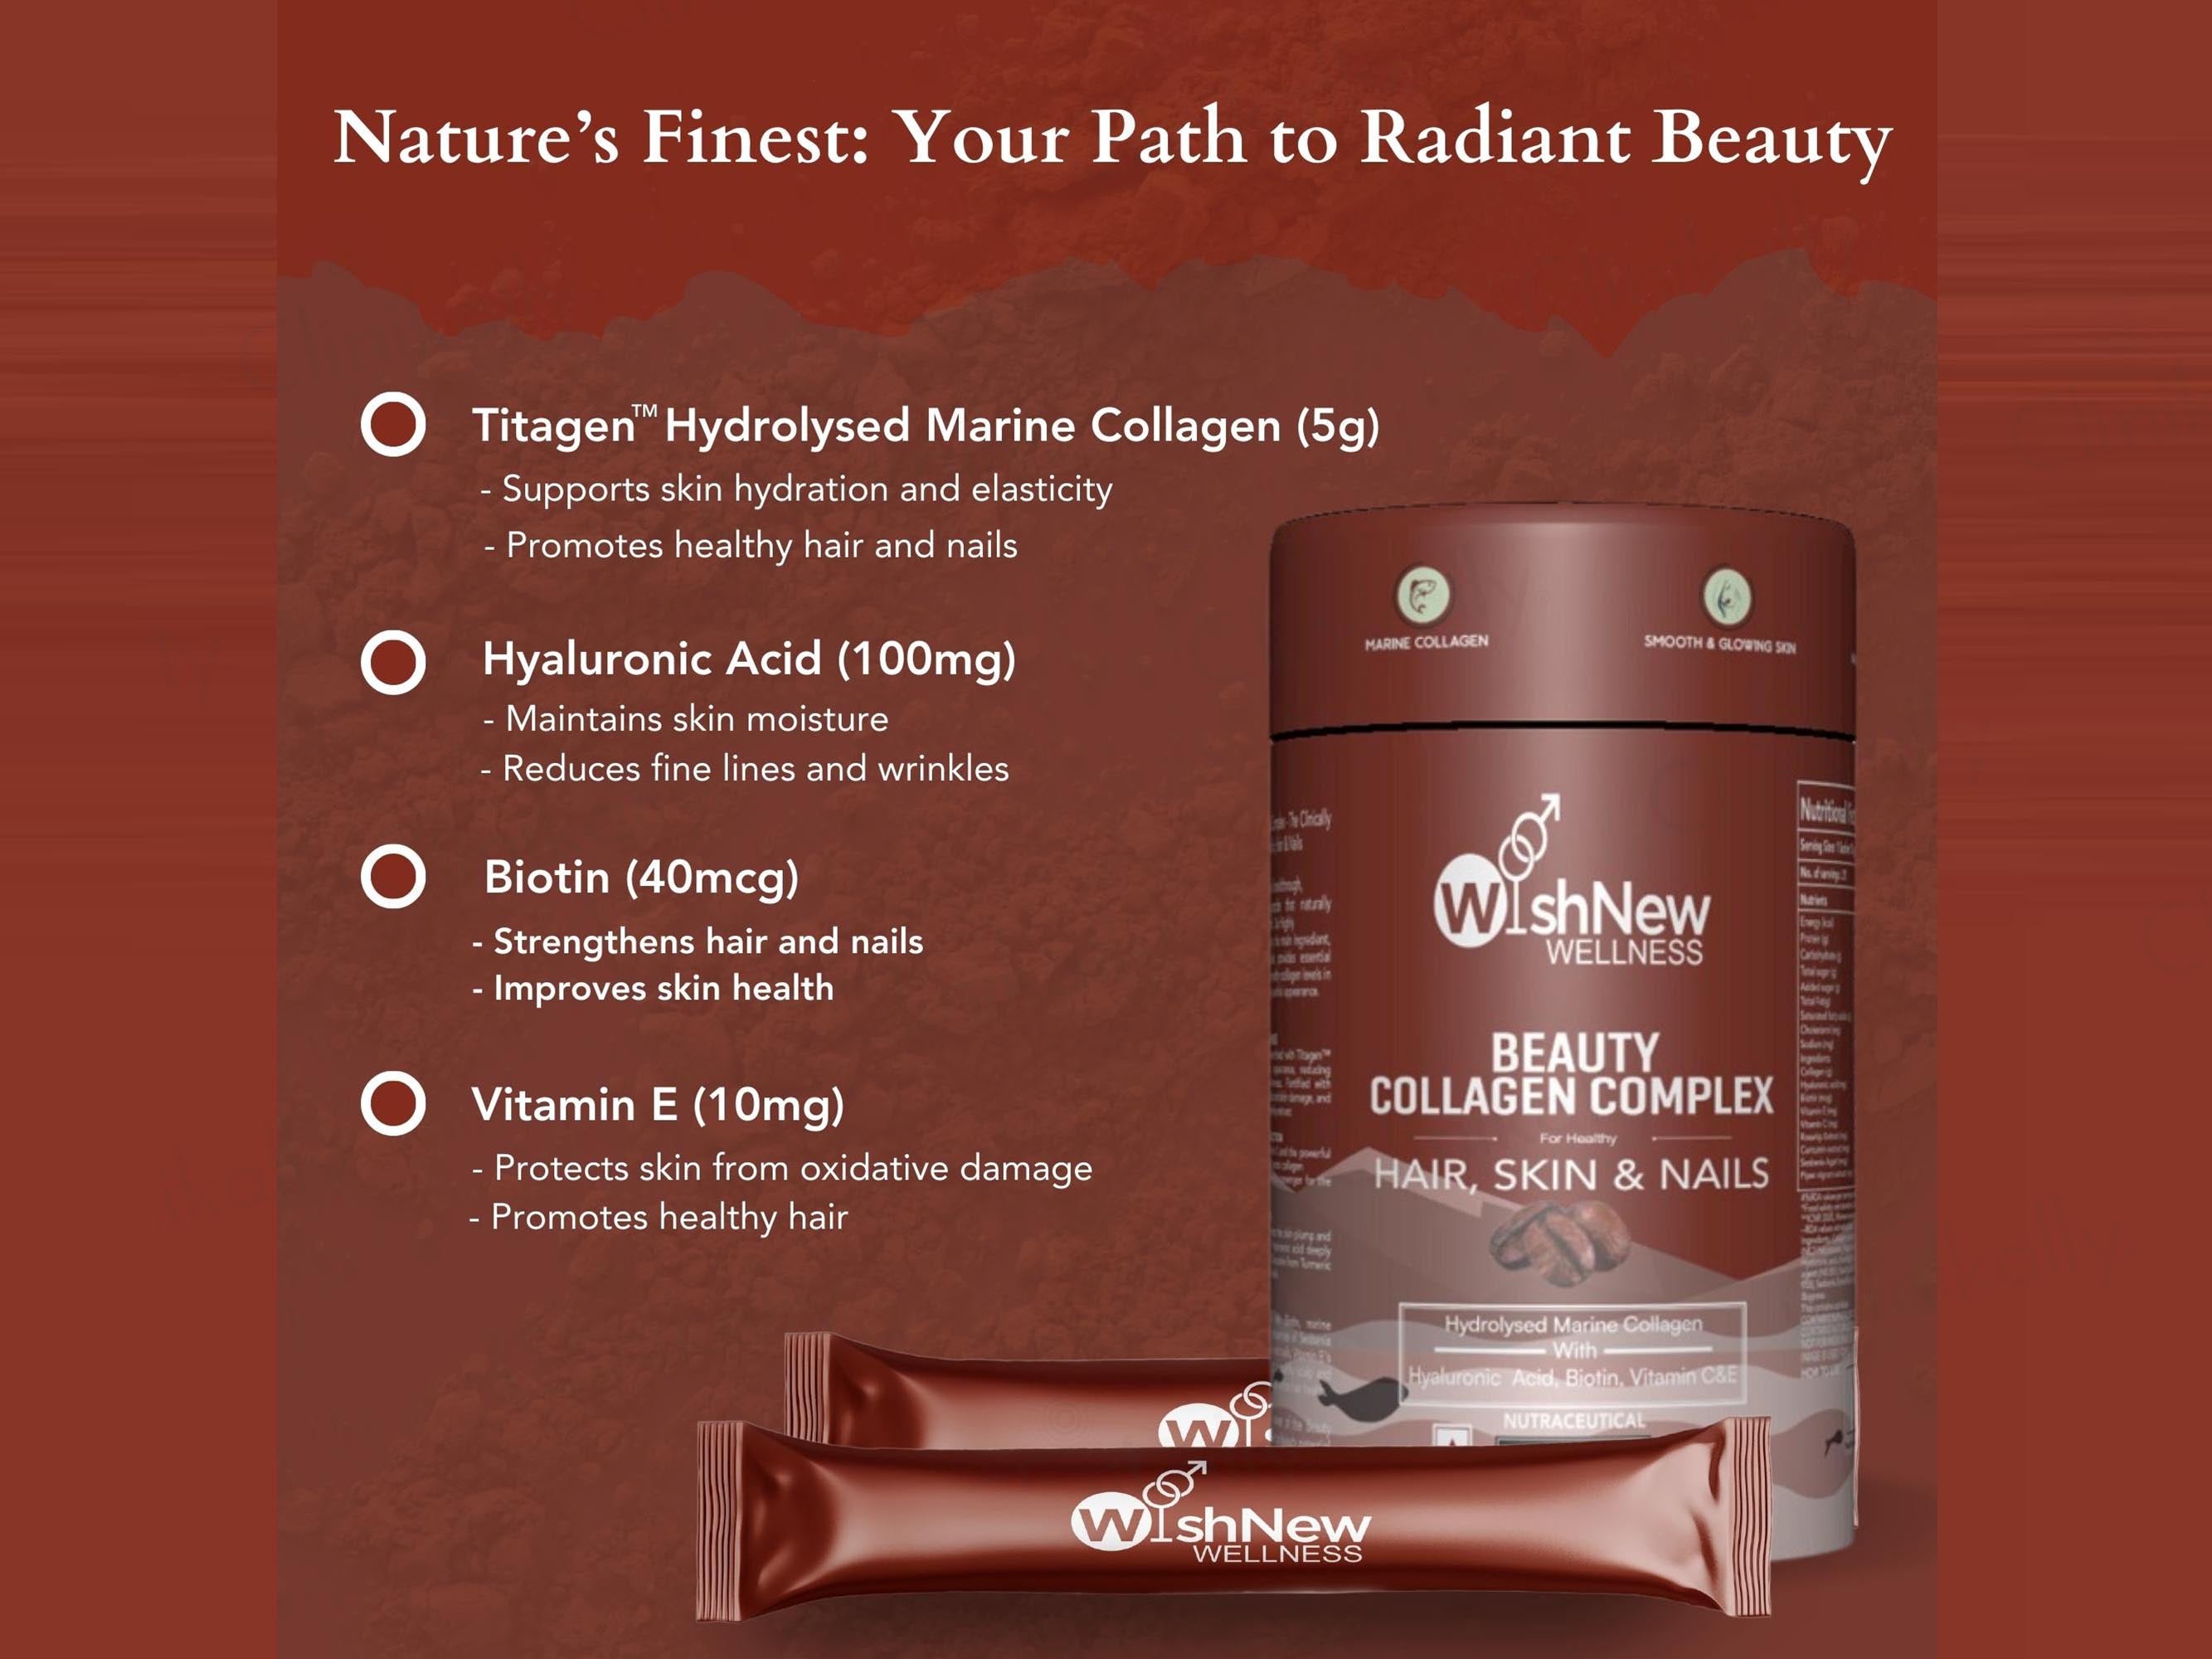 WishNew Wellness Beauty Collagen For Healthy Hair, Skin & Nails - Clinikally